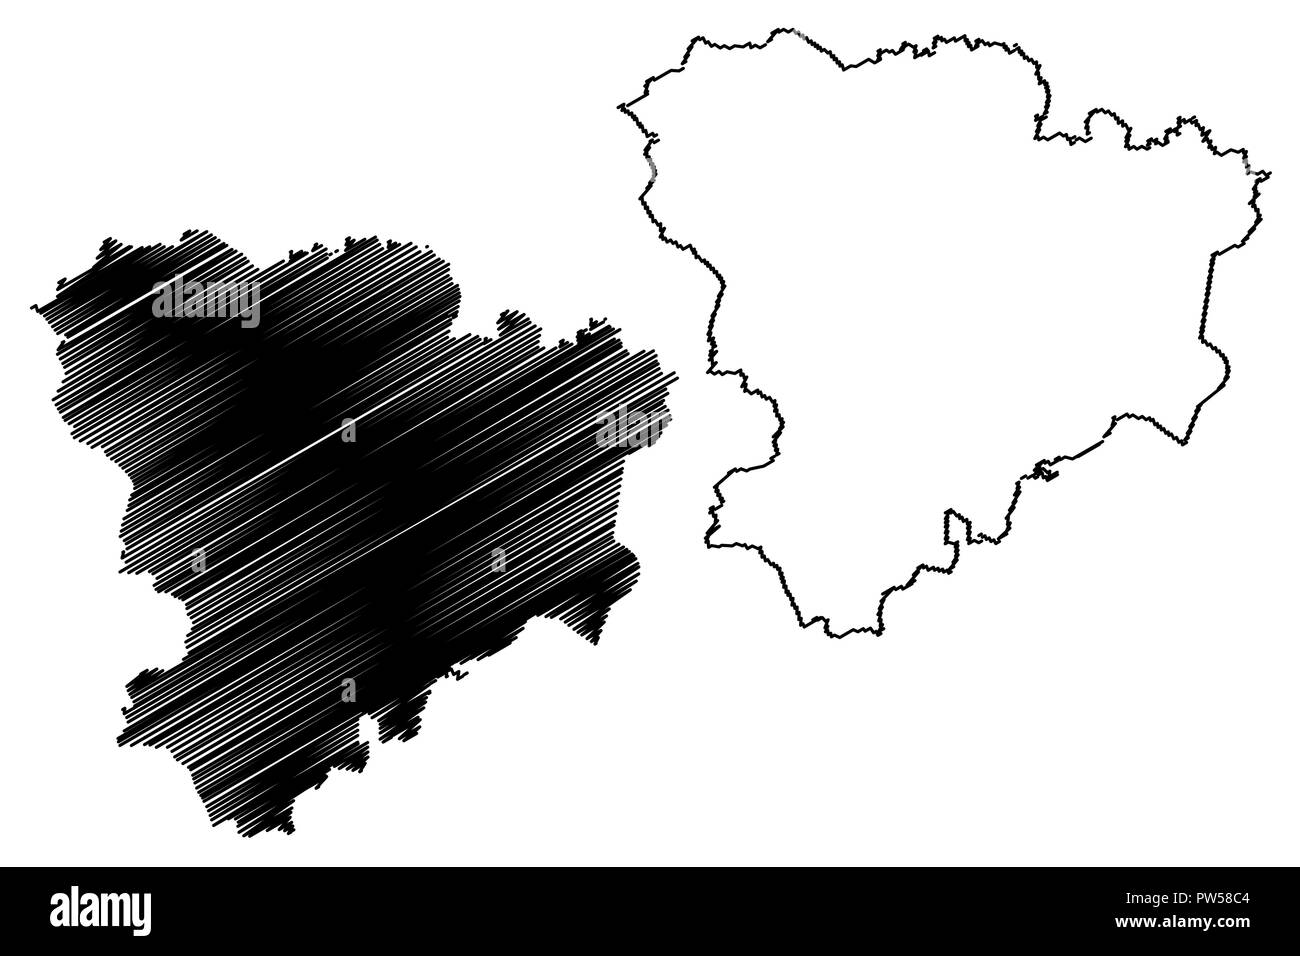 Oblast Wolgograd (Russland, Subjekte der Russischen Föderation, die oblaste Russlands) Karte Vektor-illustration, kritzeln Skizze Stalingrad Kaliningrad Karte anzeigen Stock Vektor